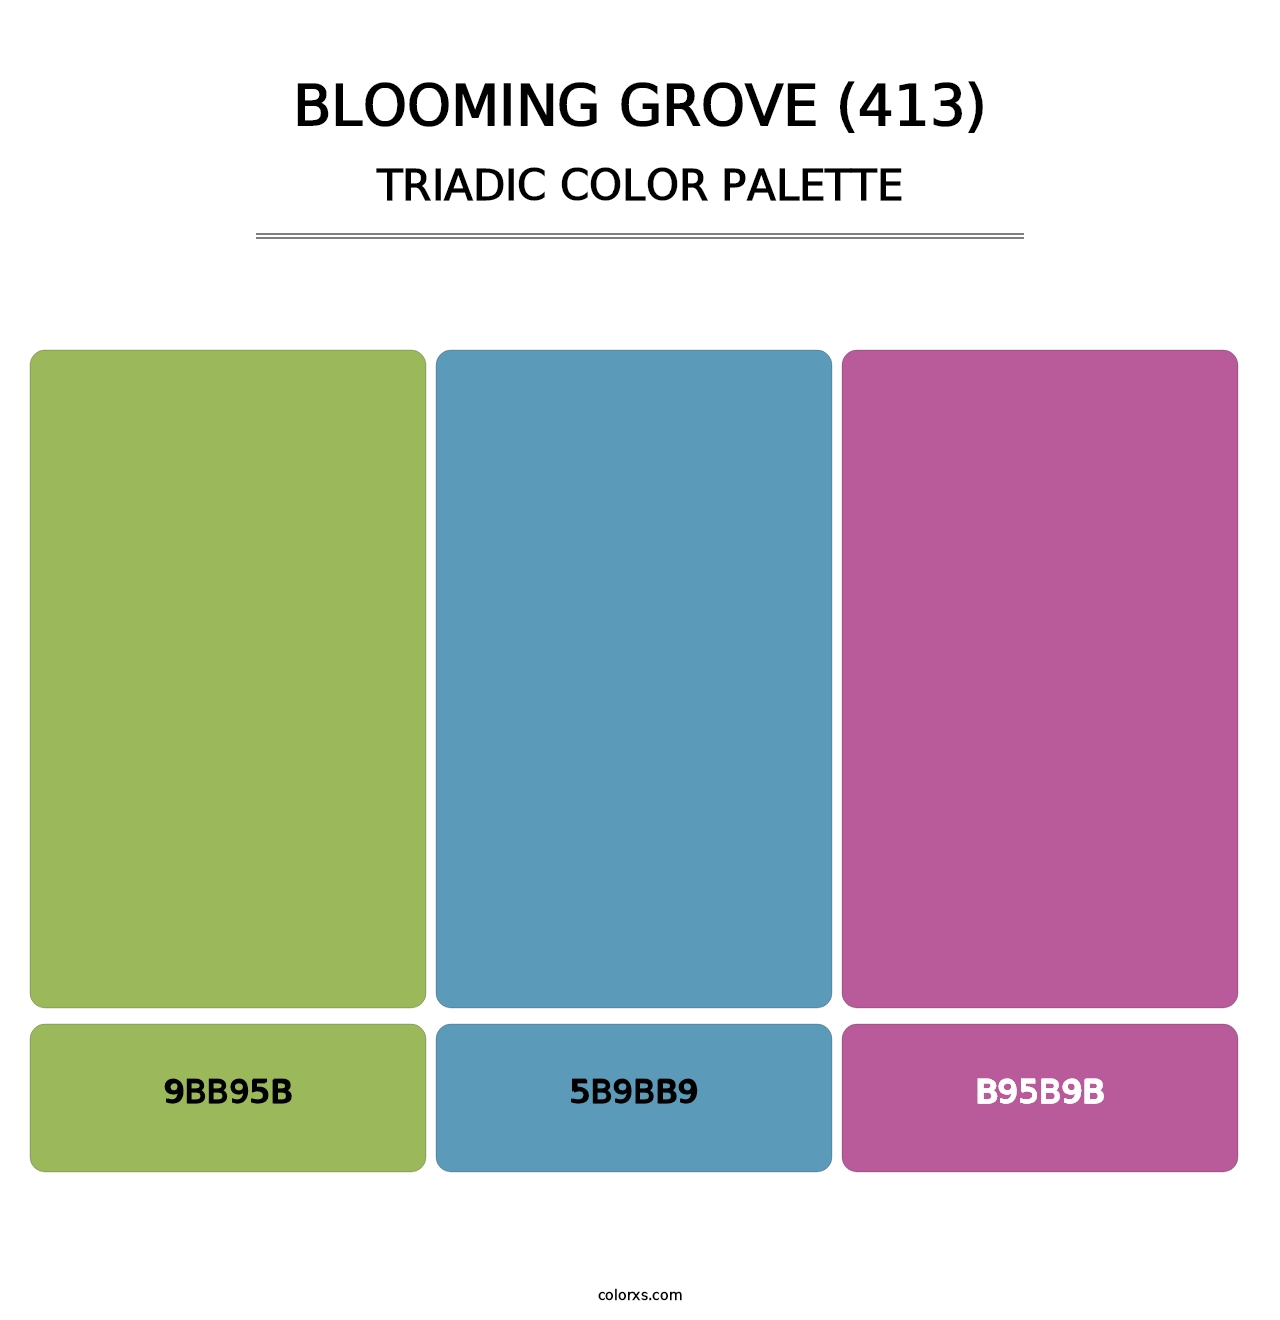 Blooming Grove (413) - Triadic Color Palette